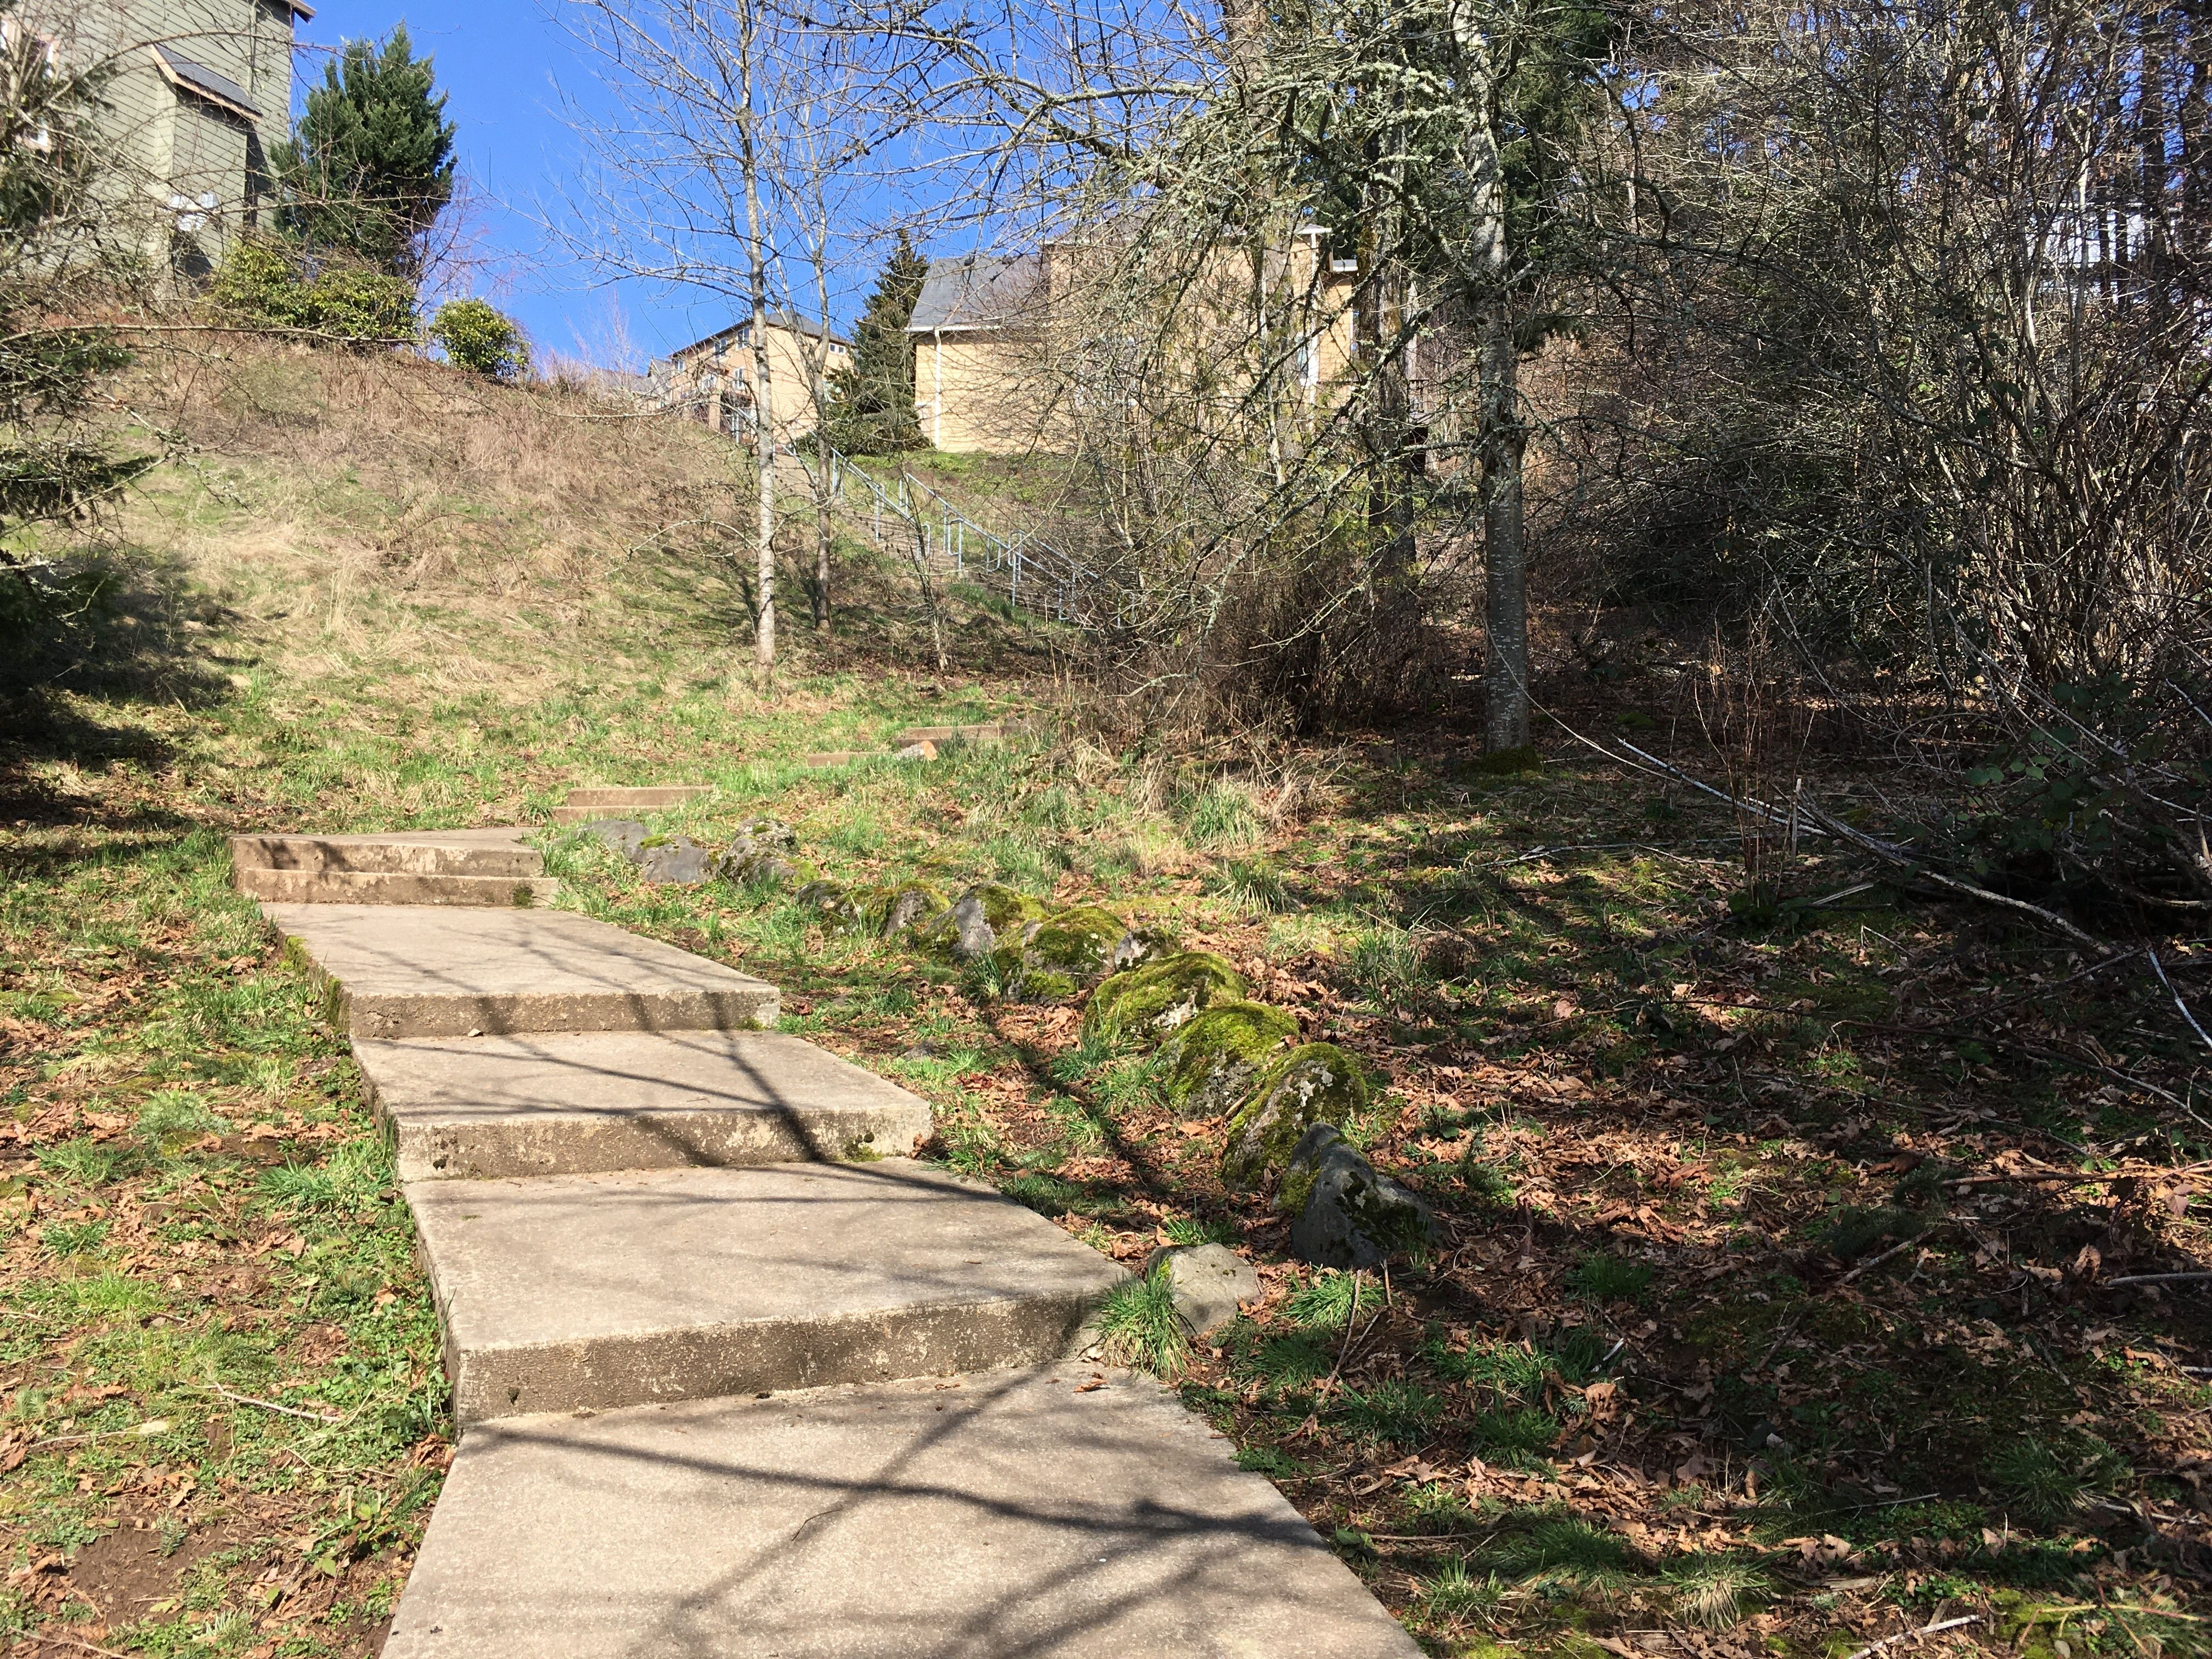 Low concrete steps wind through a hillside.